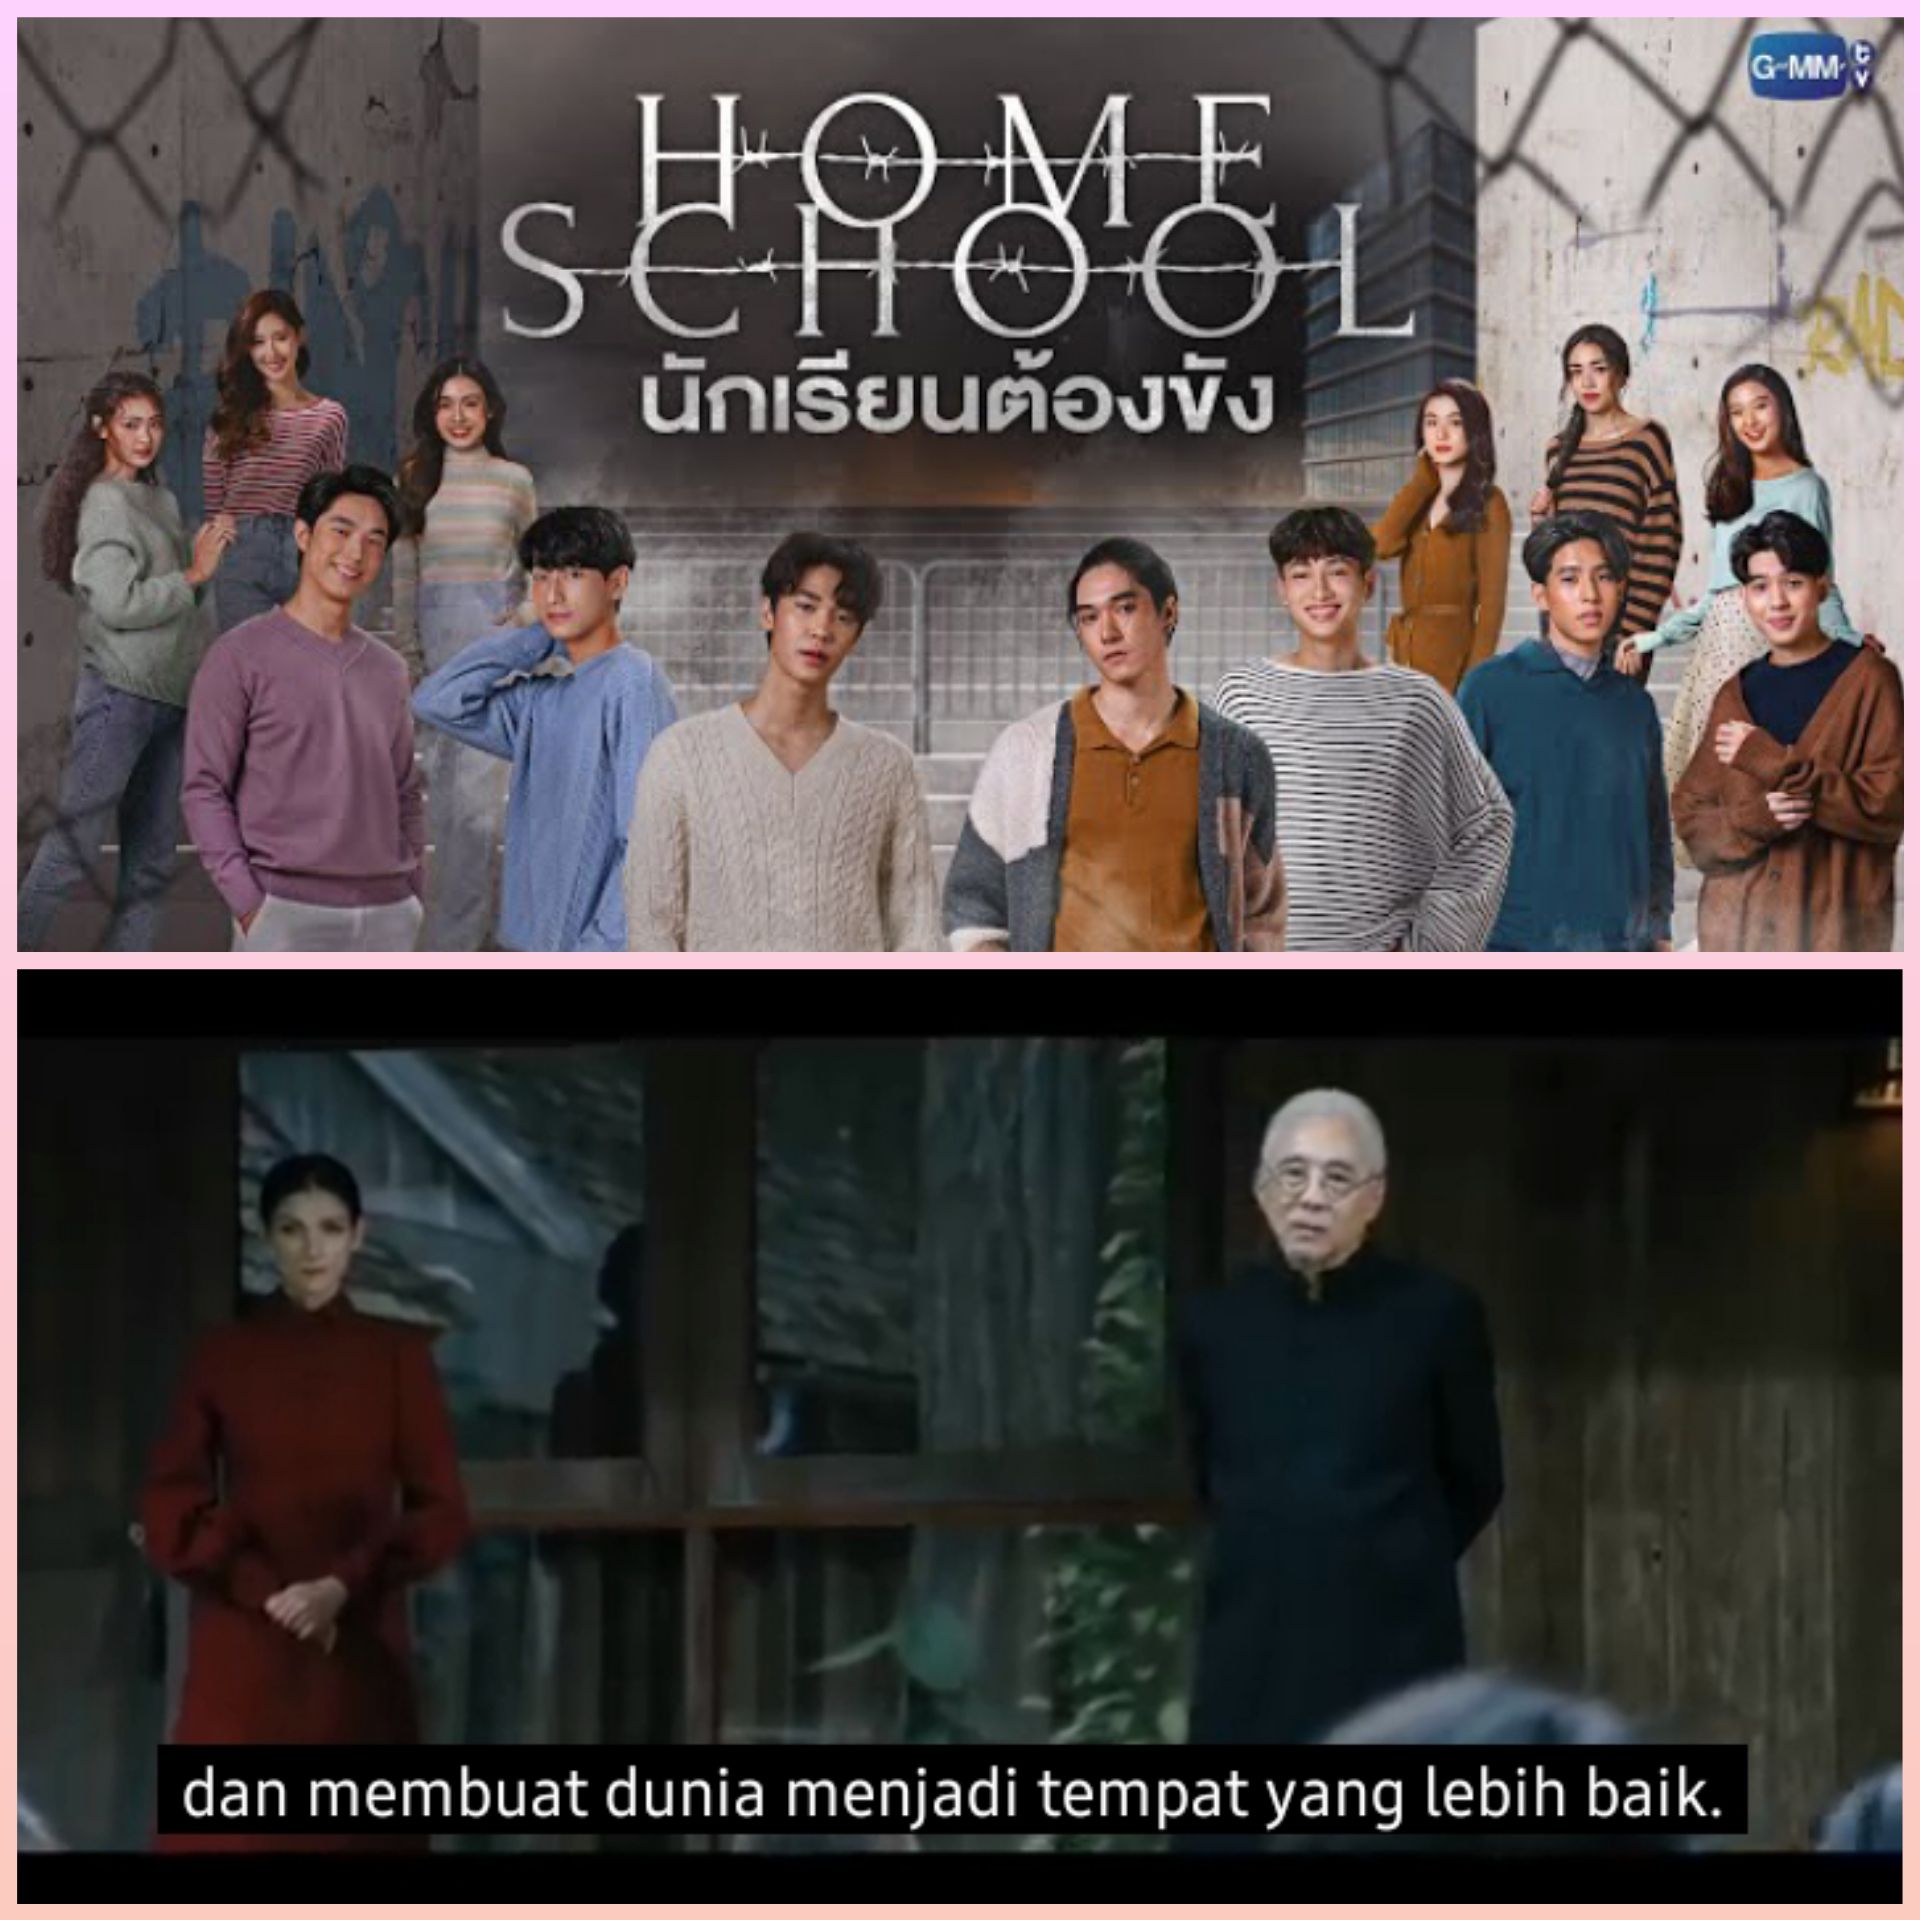 Home school thai drama